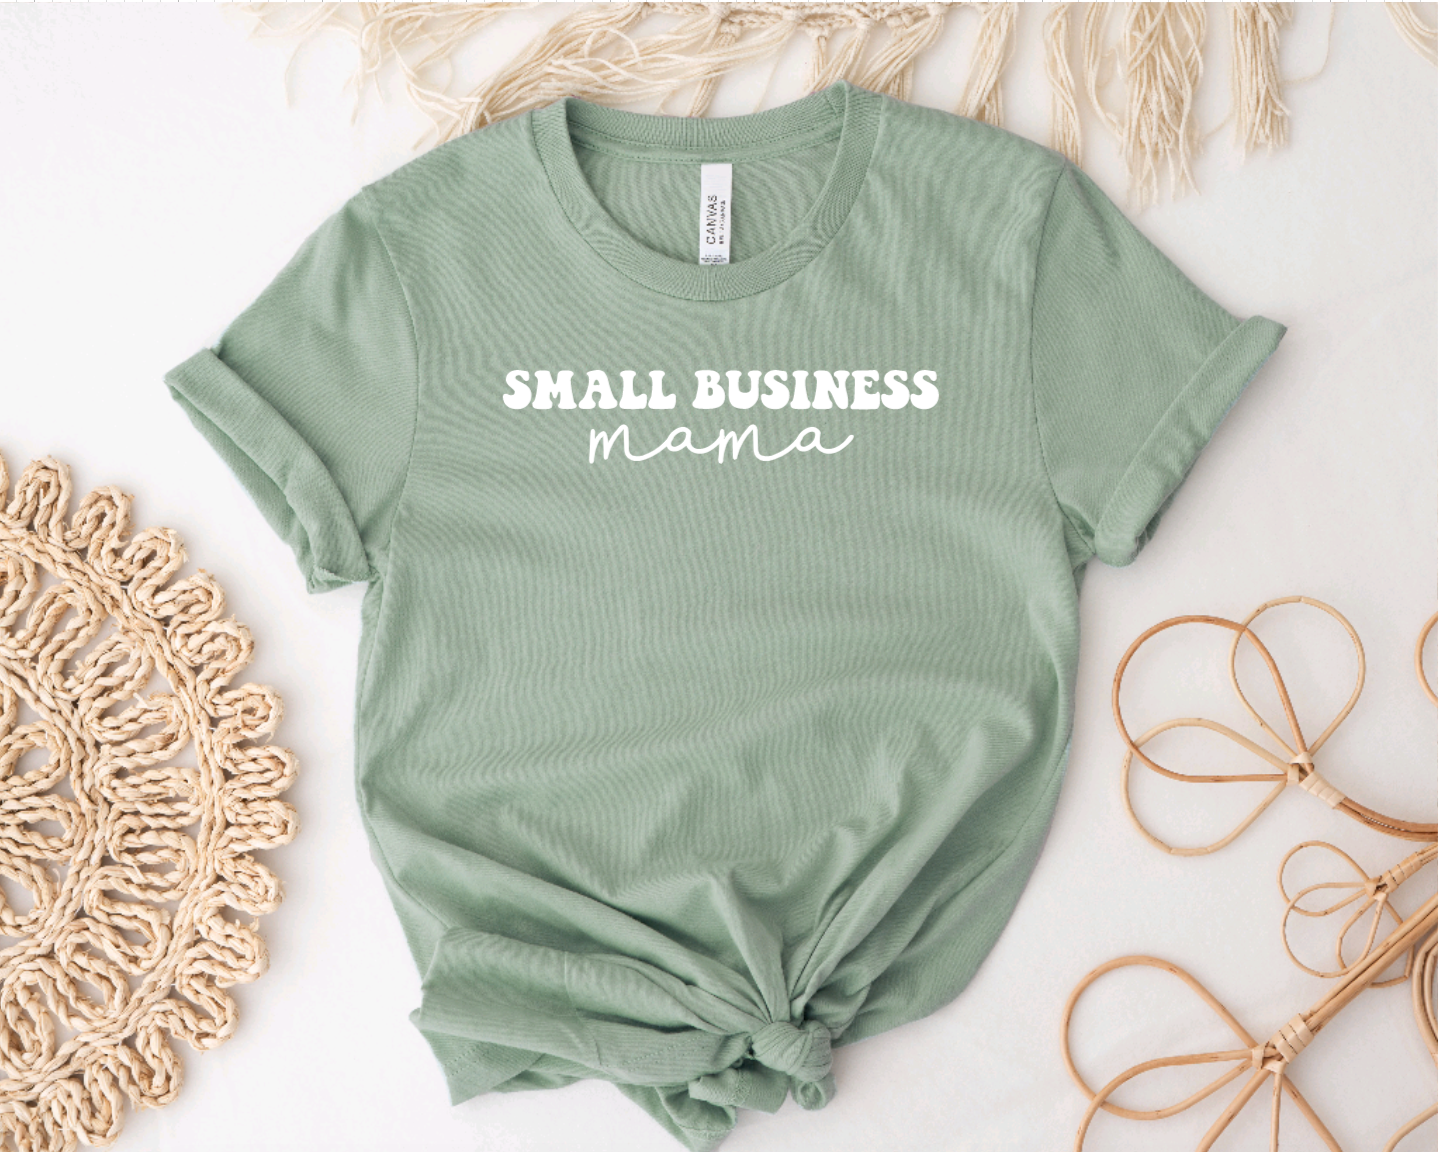 Small Business Mama Tee